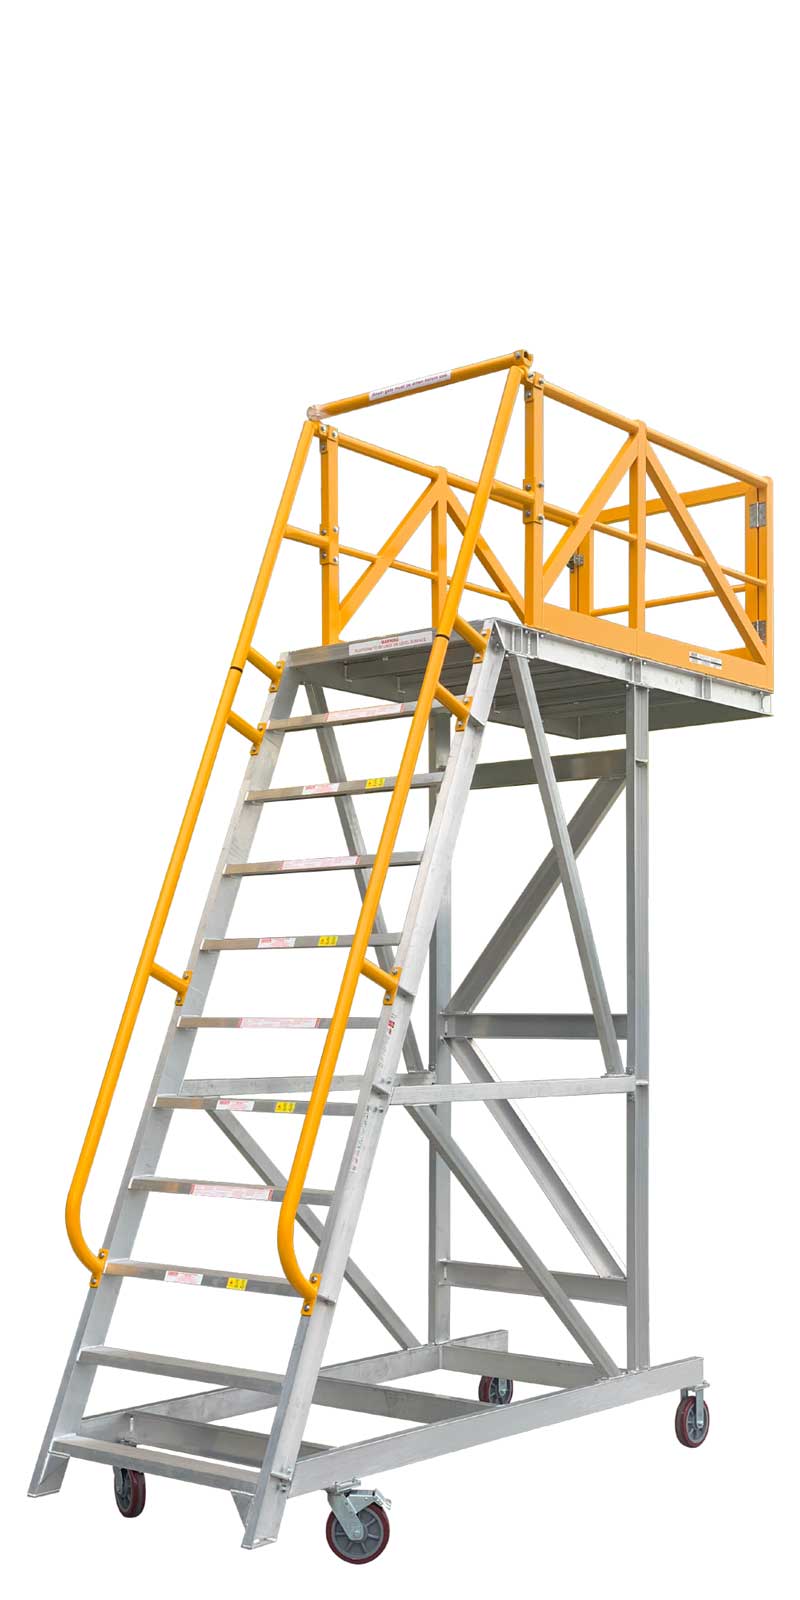 Details about   BTS Aluminum Work Platform Ladder Platform Height from 60cm-3.6m Australian Cer 